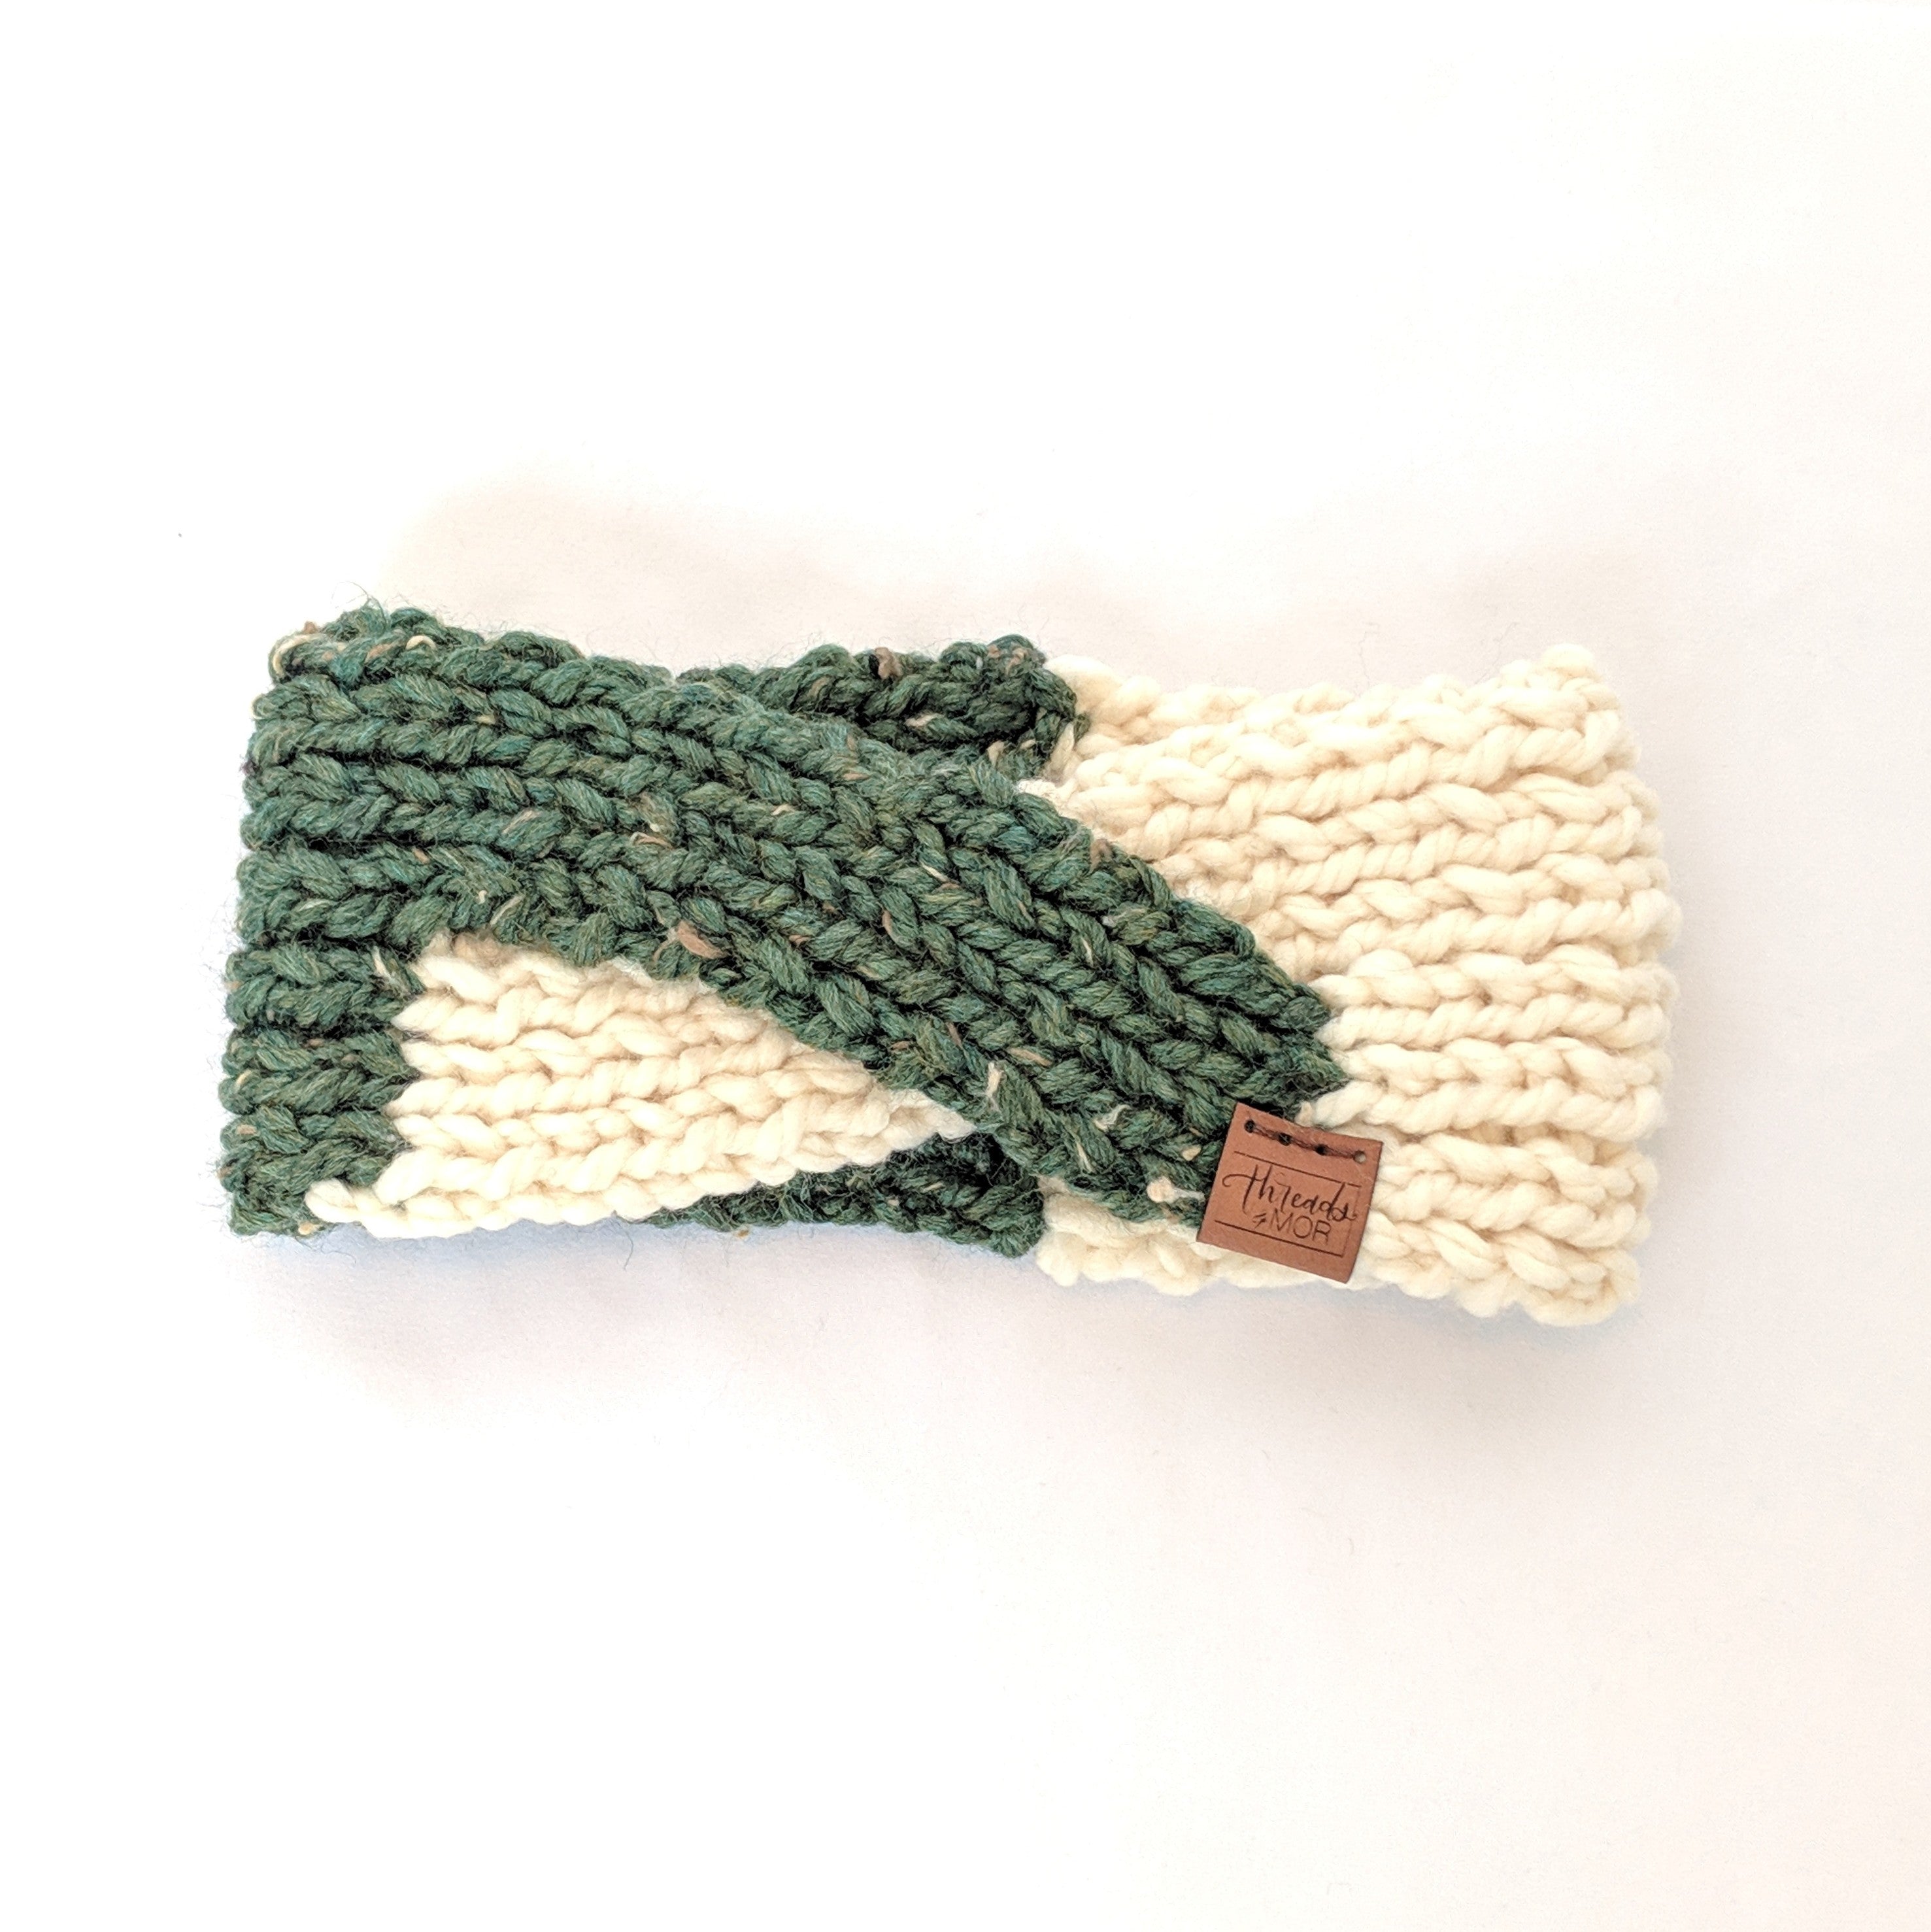 Kale and Cream twist knit headband and ear warmer